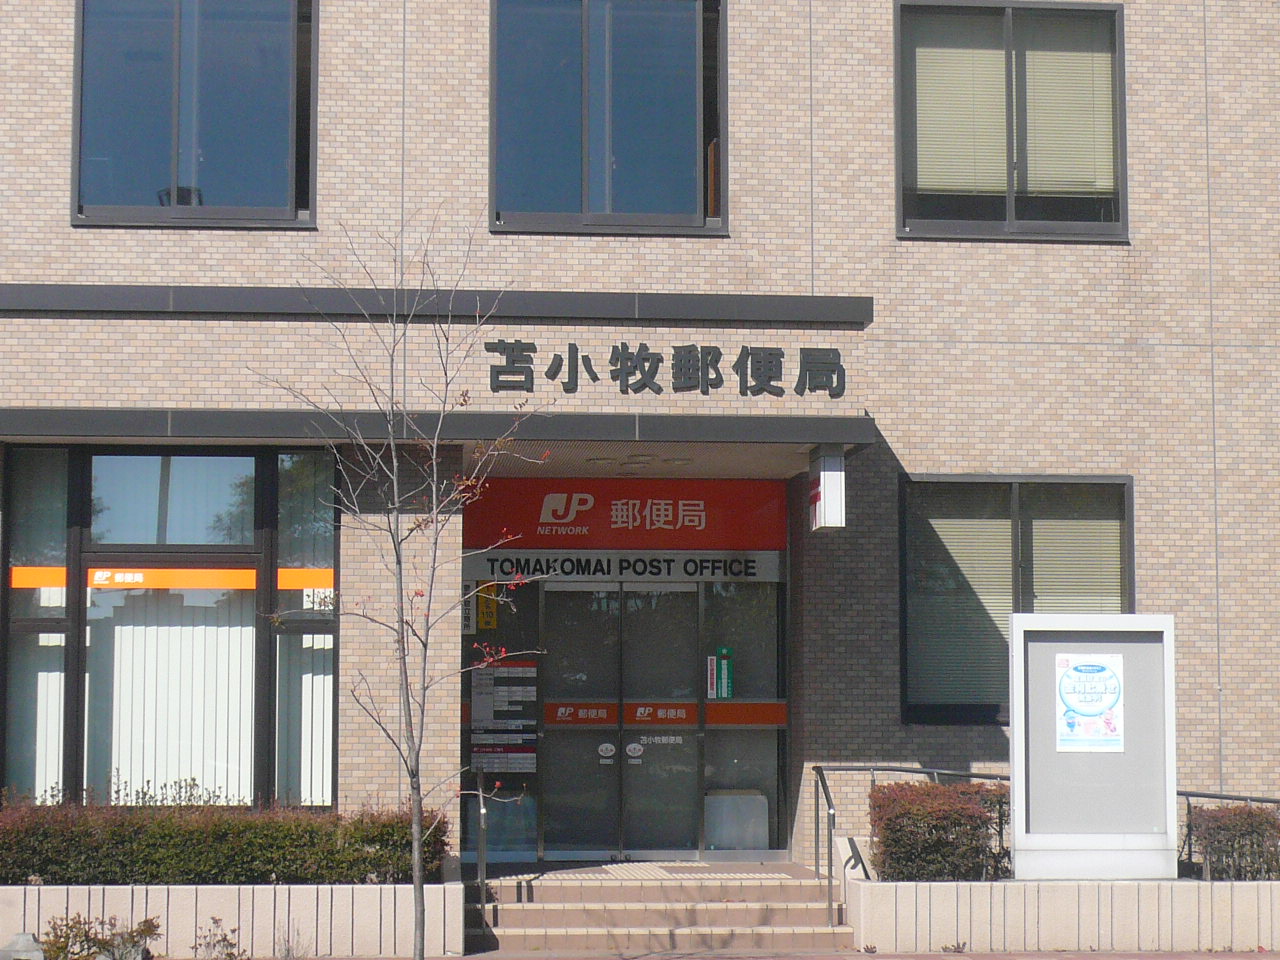 post office. 674m to Tomakomai post office (post office)